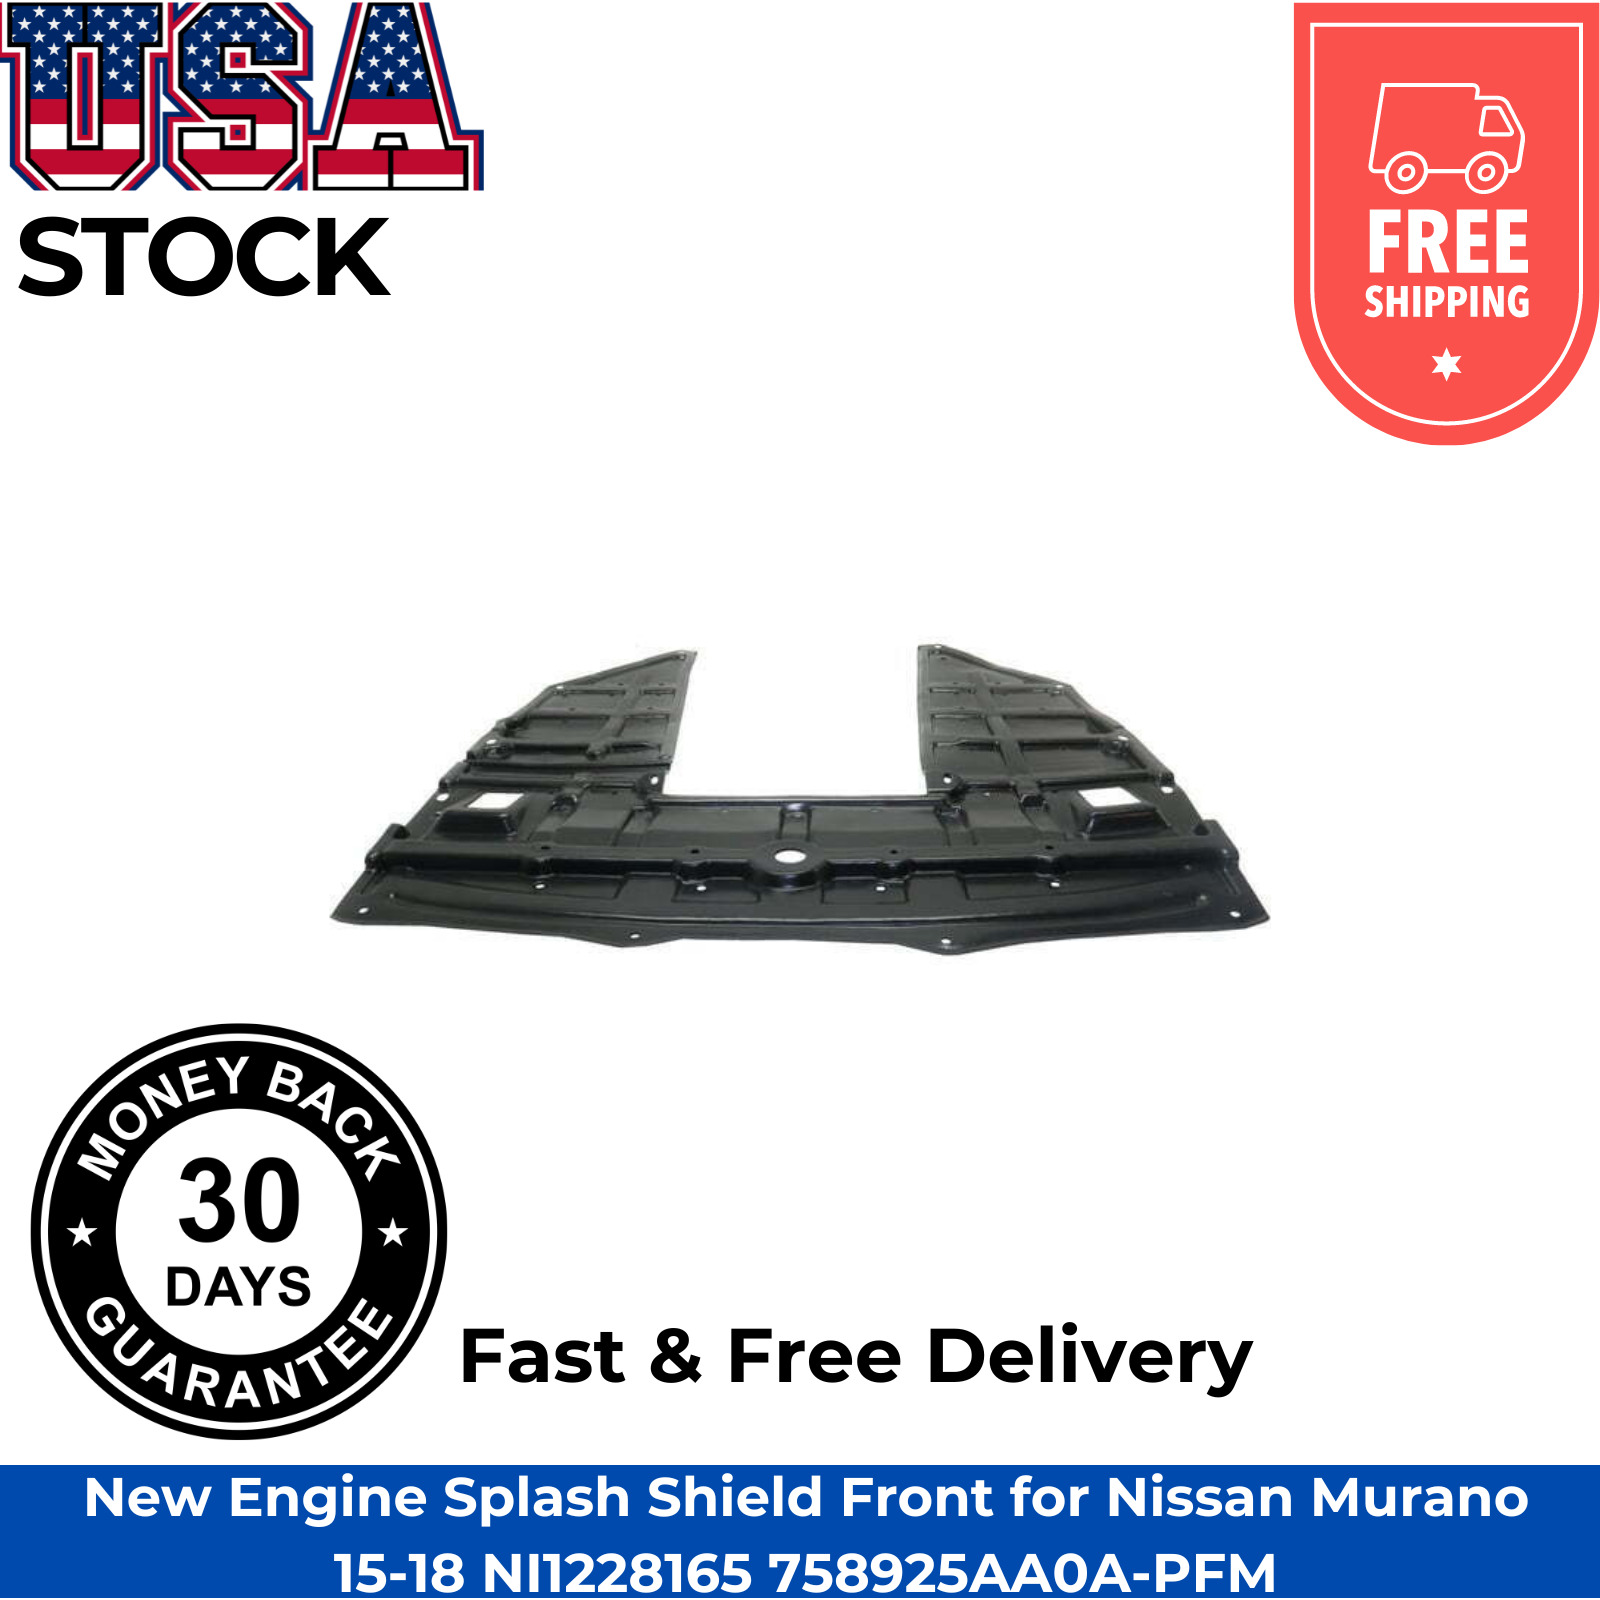 New Engine Splash Shield Front for Nissan Murano 15-18 NI1228165 758925AA0A-PFM